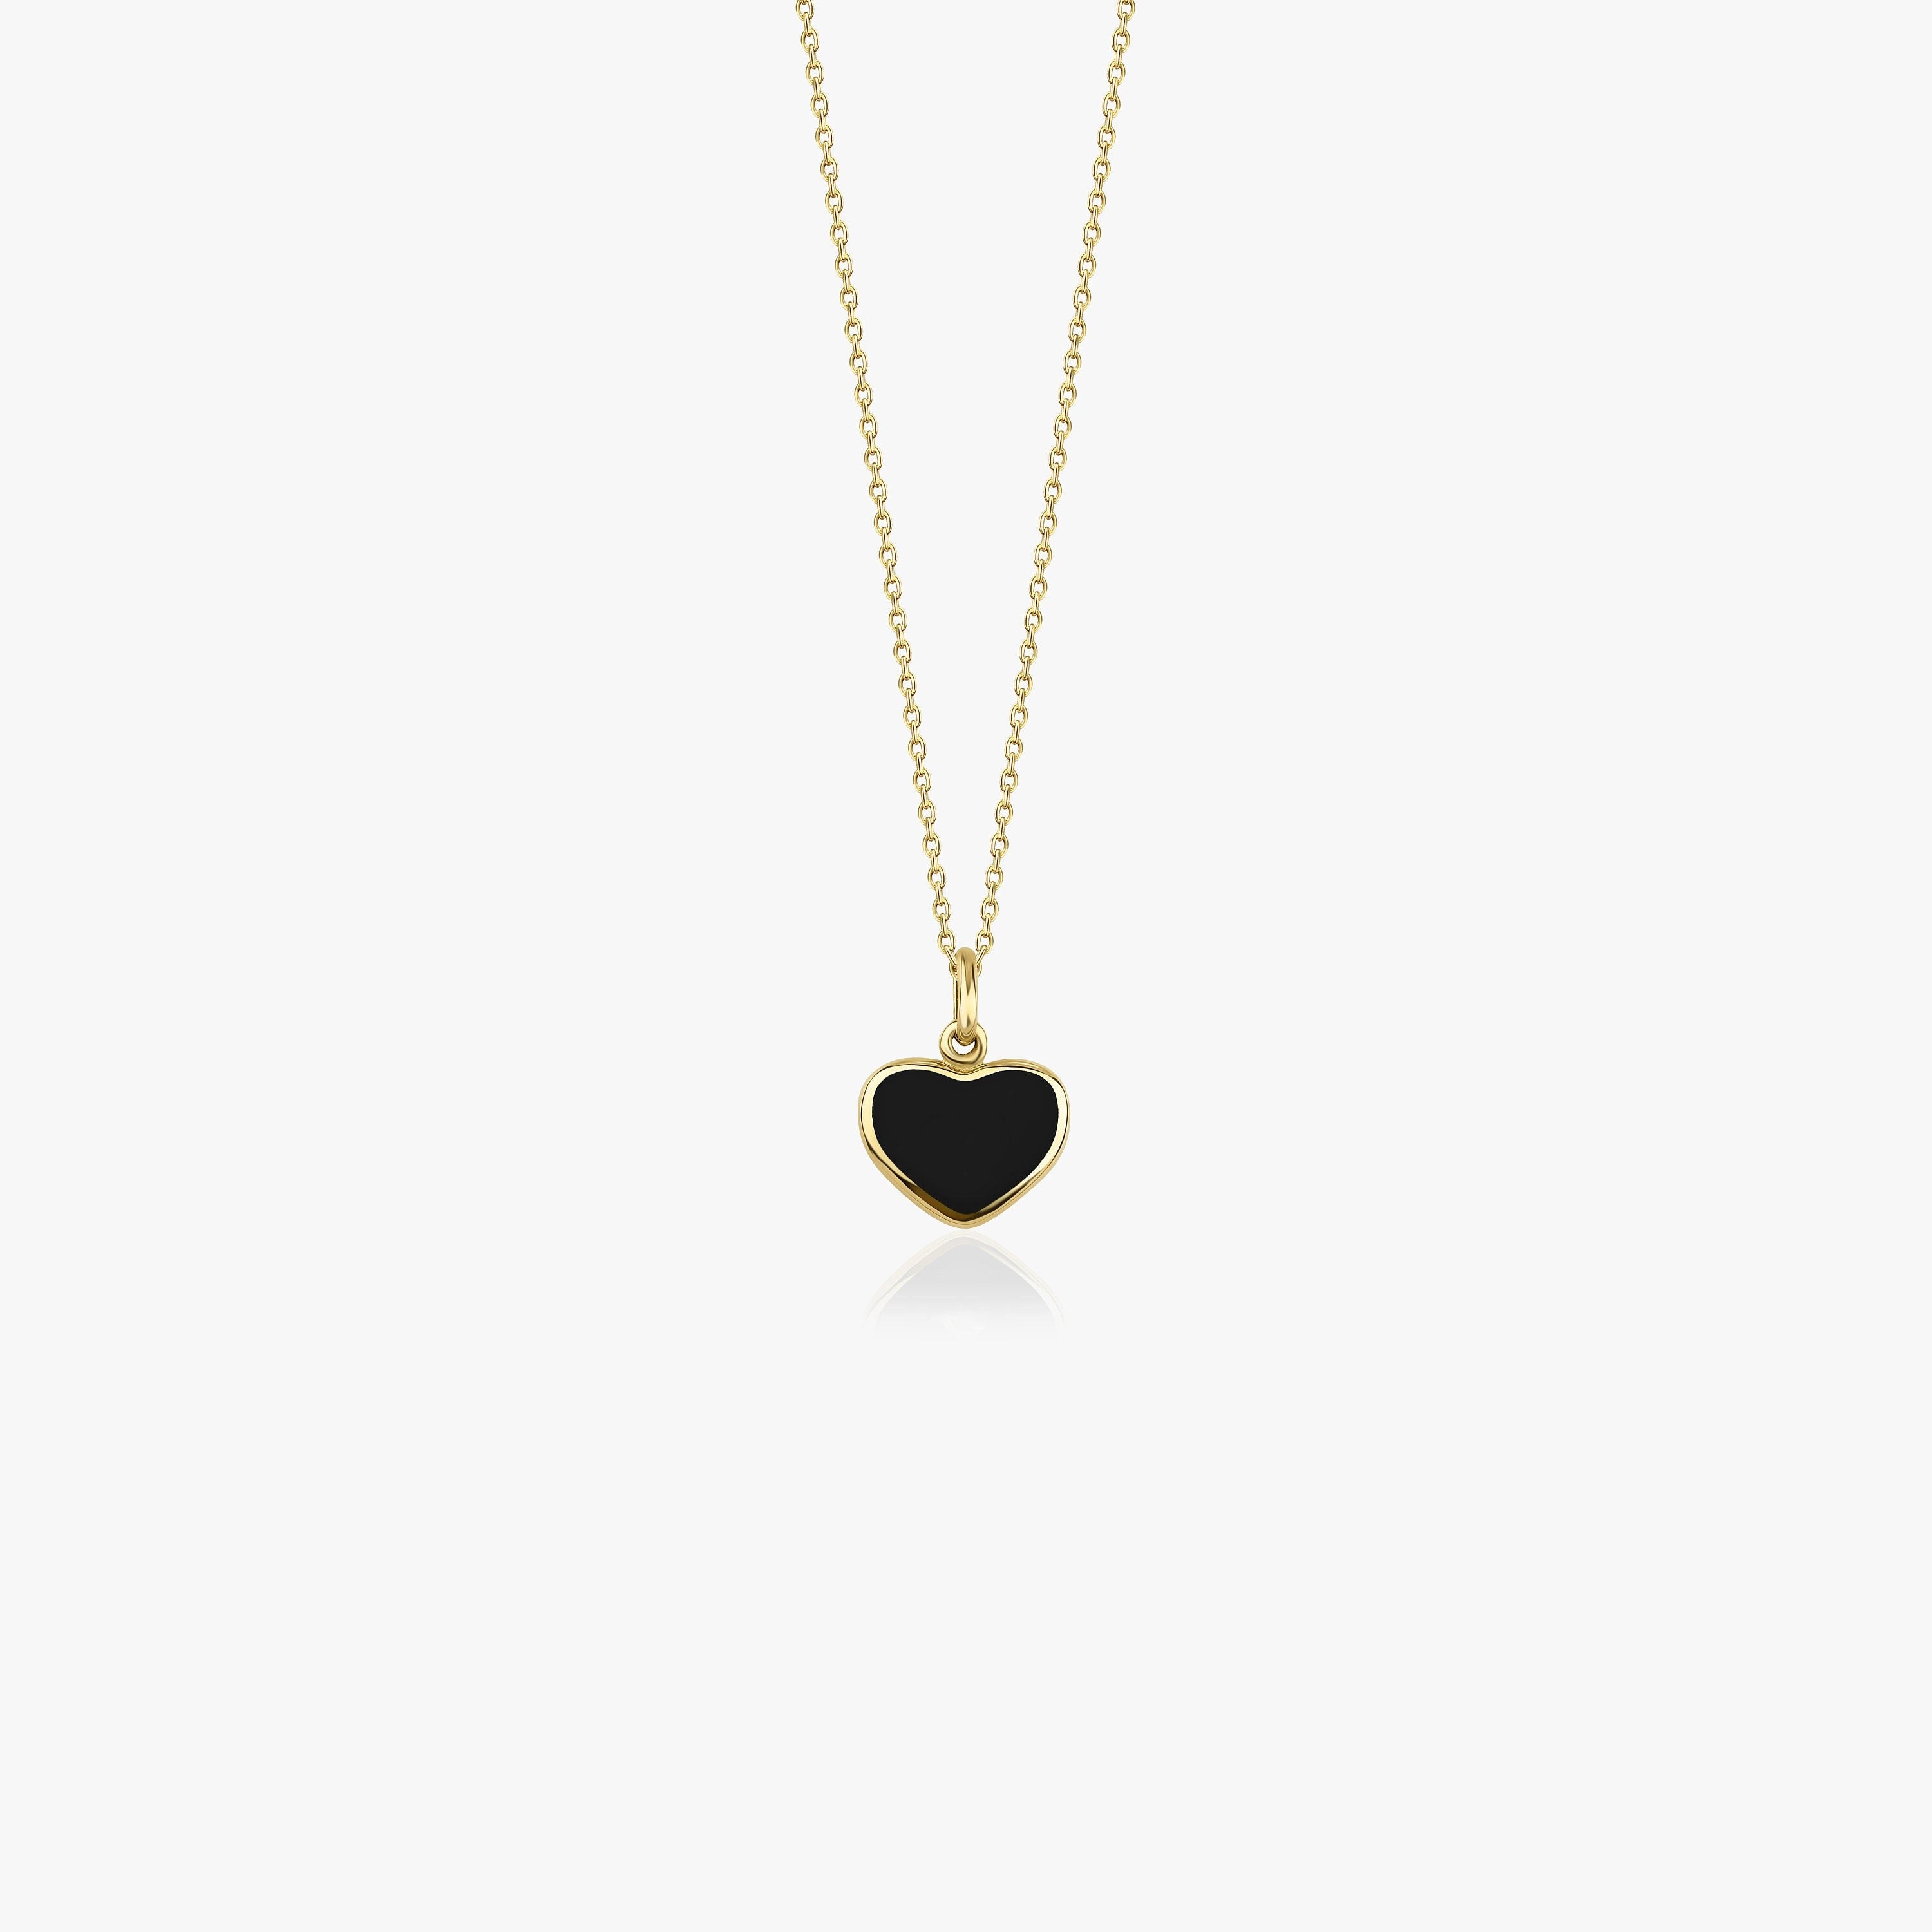 14K Gold Black Heart Pendant Necklace